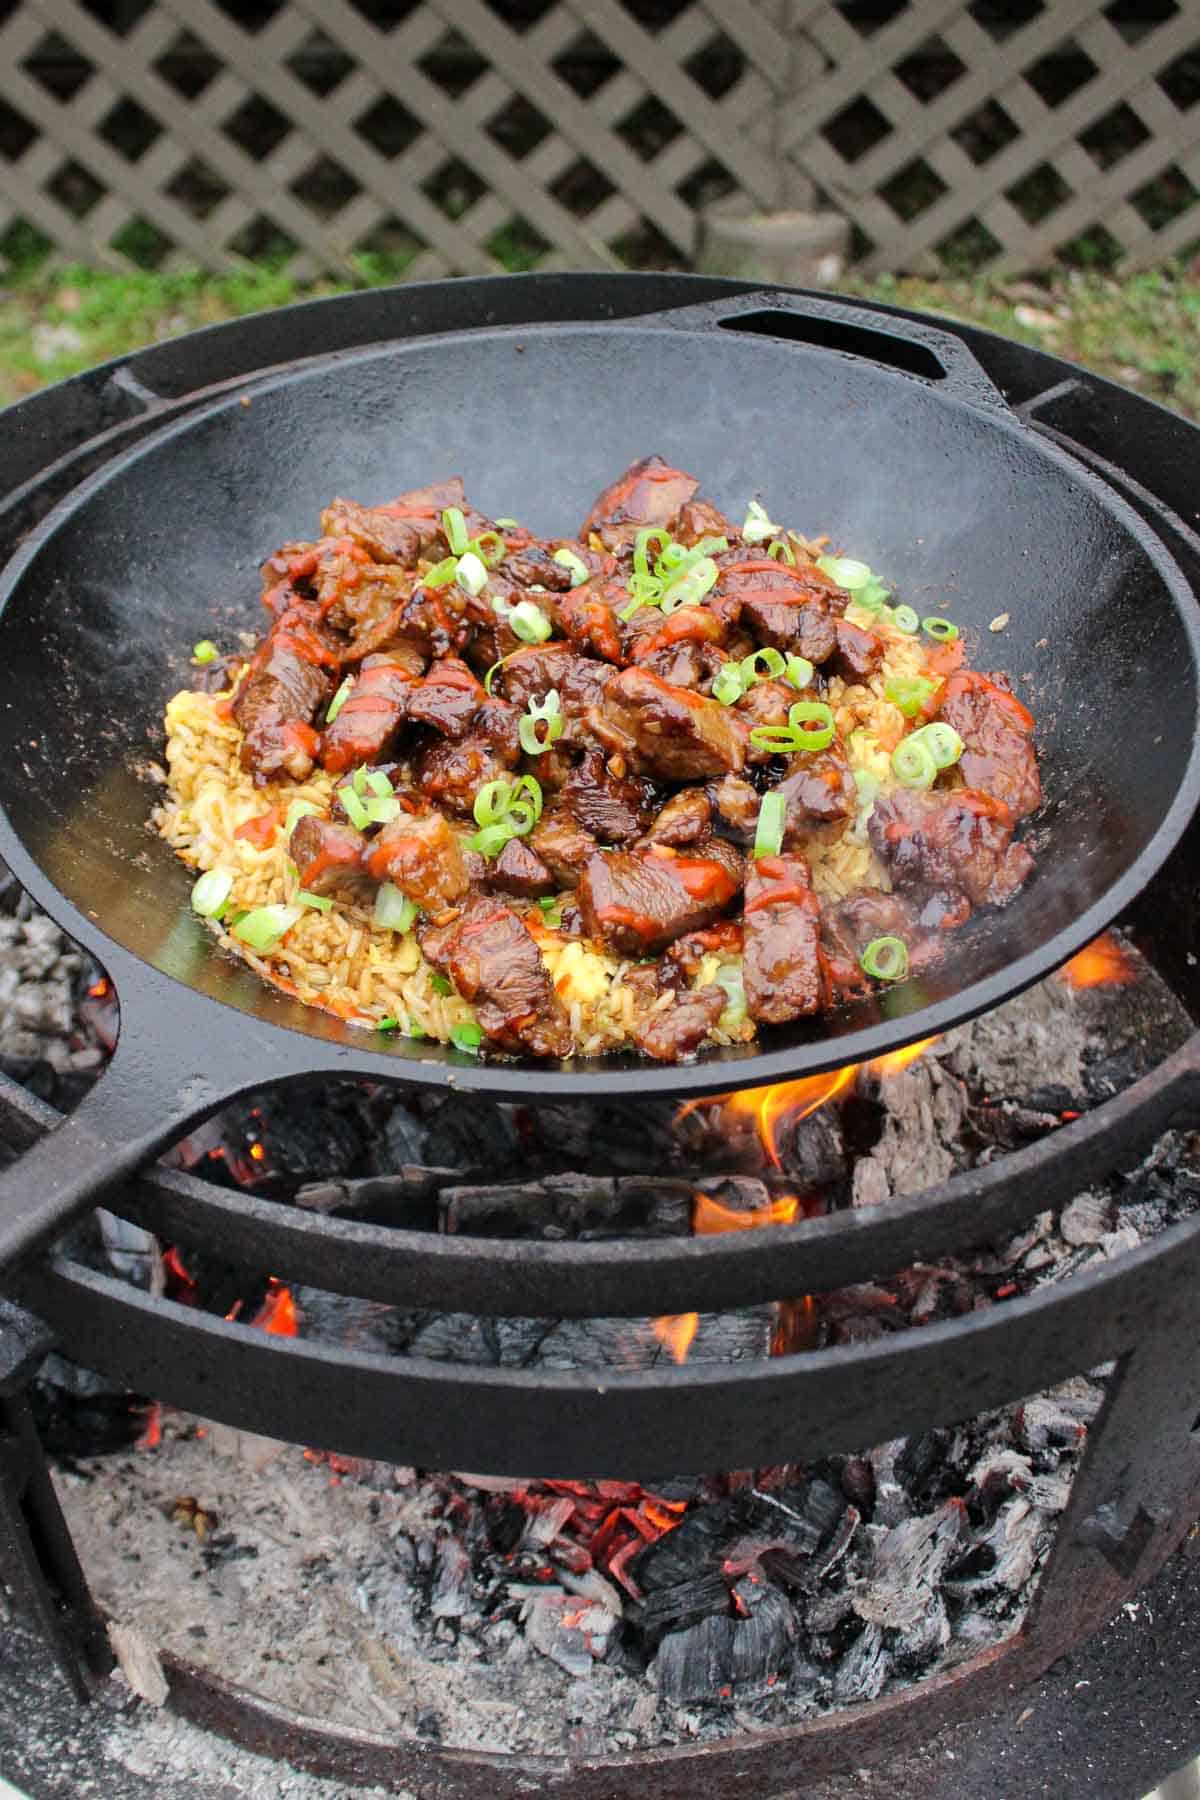 Garlic Teriyaki Steak Bites sizzling on the grill.